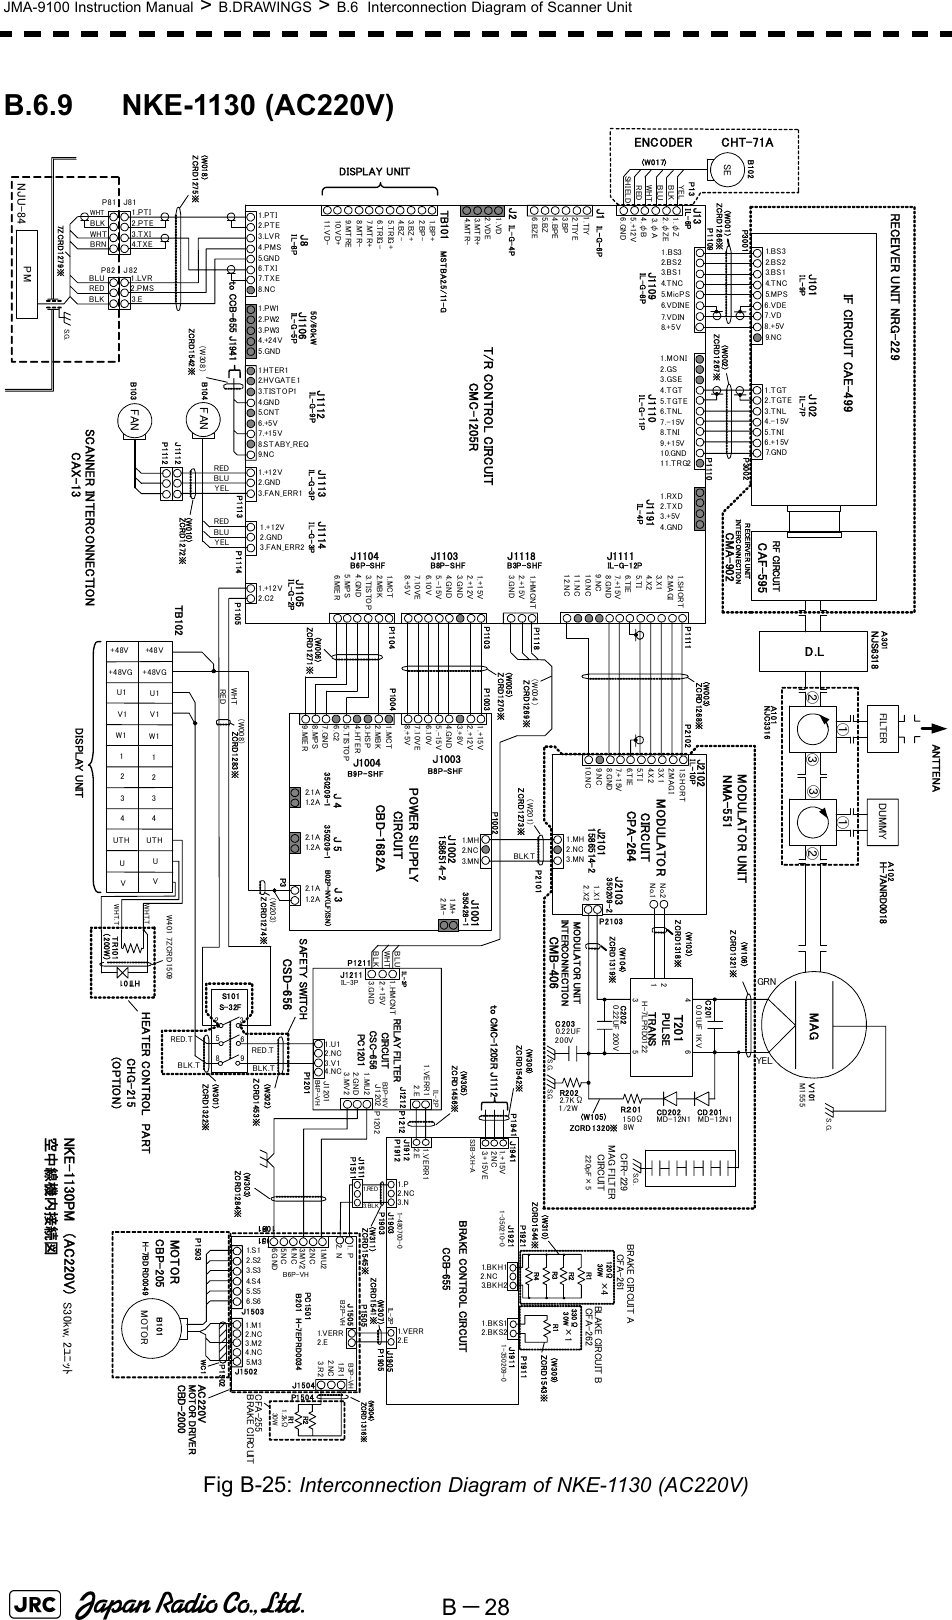 B－28JMA-9100 Instruction Manual &gt; B.DRAWINGS &gt; B.6  Interconnection Diagram of Scanner UnitB.6.9 NKE-1130 (AC220V)Fig B-25: Interconnection Diagram of NKE-1130 (AC220V) NKE-1130PM　（AC220V)空中線機内接続図1.TGT2.TGTE3.TNL4.-15V5.TNI6.+15V7.GN D1. BS 32. BS 23. BS 14. T NC5.MPS6.VDE7.VDRECEIVER UNIT NRG-229IF CIRCUIT CAE-499J101IL-9PJ102IL-7PT/R CONTROL CIRCUITCMC-1205R1.MONI2.GS3.GSE4.TGT5.TGTE6.TNL7.-15V8.TNI9.+15V10.GND11.TRG21.BS32. BS 23. BS 14. T NC5. M ic P S6.VDINE7.VDIN8.+5V1.RXD2.TXD3.+5V4.GND1. S HO RT2.MAGI3. X 14. X 25. T I6. T IE7.+15V8.GND9.NC10.NC11.NC12.NC1.HMCN T2.+15V3.GND1.+15V2.+12V3.G ND4.G ND5.-15V6.10V7.10VE8.+5V1.MCT2.MBK3. T IS TO P4.GND5.MPS6.MIE R1.TIY2.TIYE3.BP4.BPE5.BZ6.BZE1.+12V2.GND3.FAN_ERR11.HTER12.HVGA T E 13.TISTOP14.GND5.CN T6.+5V7.+15V8.STABY_REQ9.NC1.PW12.PW23.PW34.+24V5.GND1.PTI2.PTE3.LVR4.PMS5.GN D6.TXI7.TXE8.NC1. BP +2. BP -3.BZ +4.BZ -5.TRIG+6.TRIG-7.MTR+8.MTR-9. MT R E10.VD+11.VD-1.VD2.VDE3. MT R +4. MT R -J1118J1103J1104 J1111J1191J1110J1109TB101J8 J1106J1112 J1113IL-G-12PIL-8PIL -G -8P IL-G-11PB6P-SHFIL-G-9PMSTBA2.5/11-GIL- G -5PB3P-SHFIL-4PB8P-SHFIL -G -3 PMAGPOWER SUPPLY CIRCUITCBD-1682A1.+15V2.+12V3.+8V4.GND5.-15V6.10V7.10VE8.+5V1.MCT2.MBK3.HSP4.HTER5.TISTOP6.C27.GND8.MPS9.MIER2.1A1.2A2.1A1.2A2.1A1.2A1.MH2.NC3.MN1.MH2.NC3.MN1.X12.X2No.2No.1214356FILTERJ1004 J1003J 5J 4 J 3J1002J2102J2101J2103ANTTENA1. S HO R T2.MAG I3. X 14. X 25. T I6. T IE7.+15V8.GND9.NC10.NCB9P-SHF B8P-SHFB02P-NV(LF)(SN）350209-1IL-10P350209-2350209-1MODULATOR CIRCUITCPA-264MODULATOR UNIT INTERCONNECTIONCMB-406D.L①②③①②③GRNYELC2010.01UF 1KVC2020.22 U F 2 00 VR202 2.7KΩ1/2WC2030.22UF200VT201 R２01150Ω8WH-7LPRD0122CD202 CD201MD-12N1MD-12N1NJC3316Ａ101M1555Ｖ101R ECEIRVER UNIT INTERCONN ECTIONP3001 P3002P1109 P1110P1104P1103 P1003P1004P1111PULSE TRANS（W201)BLK.TP3P2103P1118DUMMYＡ102H-7ANRD0018(W001) (W002)(W003)(W006)P10021.+12V2.GND3.FAN_ERR2J1114IL-G-3P1.+12V2.C2J1105IL-G-2PP1105MODULATOR UNITNMA-551SCANNER INTERCONNECTIONCAX-13(W106)ZCRD1321※(W103)ZCRD1318※(W104)ZCRD 1319※(W105)ZCRD1320※ZCRD1267※J1IL-G-6PJ2IL-G-4PＡ301NJS6318ZCRD1268※CMA-902ZCRD1266※ZCRD1273※ZCRD1269※（W004）(W005)ZCRD1270※ZCRD1271※50/60ｋWP2101P21028.+5V9.NCRF CIRCUIT CAF-595J1001350428-11.M+2.M-1586514-21586514-2S.G.S.G. S.G.1.φZ2.φZE3.φ A4.φB5.+12V6.GNDJ13IL-6PSEYE LBLKBLUWHTREDSH I ELDB102ENCODER CHT-71AP13(W017)DISPLAY UNITFANREDBLUYELB104B103 FAN(W010)P1113 P1114(W301)TB102S101S-32F239568SAFETY SWITCHCSD-656(W203)ZCRD1274※REDWHTREDBLUYELZCRD1272※P1112J11121.PTI2.PTE1.LVR2.PMS3.E3.TXI4.TXEJ82J81PMP81P82WHTBLKBLUREDBLKWHTBRNNJU-847Z CRD1 27 9 ※(W018)ZCRD1275※(W008)ZCRD1283※S. G.S30kw, 2ﾕﾆｯﾄRED.TRED.TBLK.TBLK.TZCRD1322※(W302)ZCRD1453※S.G.CFR-229MAG FILTER CIRCUIT22 0pF ×5P1201+48V+48VGU1V1W1U1W1V1DISPLAY UNIT+48V+48VG12VU123434VUUTHUTHTH101TR101（200W）HEATER CONTROL  PARTCHG-215(OPTION)WHT.TWHT.TW401 7ZCRD1509to CMC-1205R J1112WHTBLKBLUMOTOR DRIVERCBD-2000ZC RD 145 6※(W305)P1212BRAKE CIRCUITCFA-255J15011.V ERR2.EH-7EPRD0034B201J1505PC1501P1501B2P-VHP1505RELAY FILTER CIRCUITCSC-656PC1201IL-3P1.HMCNT2.+15V3.GNDP1211P12021.MU2J12121.VERR12.E3.MV2J1202J1201J12111.U13.V12.NC4.NC2.G N DB4P-VHB3P-NVIL-3PIL-2P1.VERR12.E1.VERR2.E1.P2.NC3.N1. P2. N1. BK H 13. BK H 21.BKS12.BKS21.+15V2.NC3.+15VEP1941 J1941J1903P1903J1905P1905J1912P1912BRAKE CONTROL CIRCUITCCB-655P1502J1921P1921J1911P19111.RE D3. BL KJ1511P1511IL-2PS3B-XH-A1-350210-0 1-350209-01-480700-0ZCRD1542※(W308)ZCRD1545※(W311) ZCRD1541※(W307)ZCRD1284※(W303)AC220VWC1ZCRD1543※(W309)ZCRD1544※(W310)BLAKE  CIR CUI T BCFA-262BRAKE CIRCUIT ACFA-261R1R2R3R4R1120Ω30W330Ω30W×4×12.NC4.NC1. S 12.S23.S34. S 45.S56.S6J1502J15033.M21.M15.M3P1503MOTORMOTORB101CBP-205H-7BDRD00492.NC(W304)ZCRD1316※R1R21.2kΩ30WP15041.R 13.R2J1504B3P-VH2.NC3.M V 21.M U22.N C4.NC5.N C6.G N DB6P-VHto  CCB-655 J1941(W308)ZCRD1542※